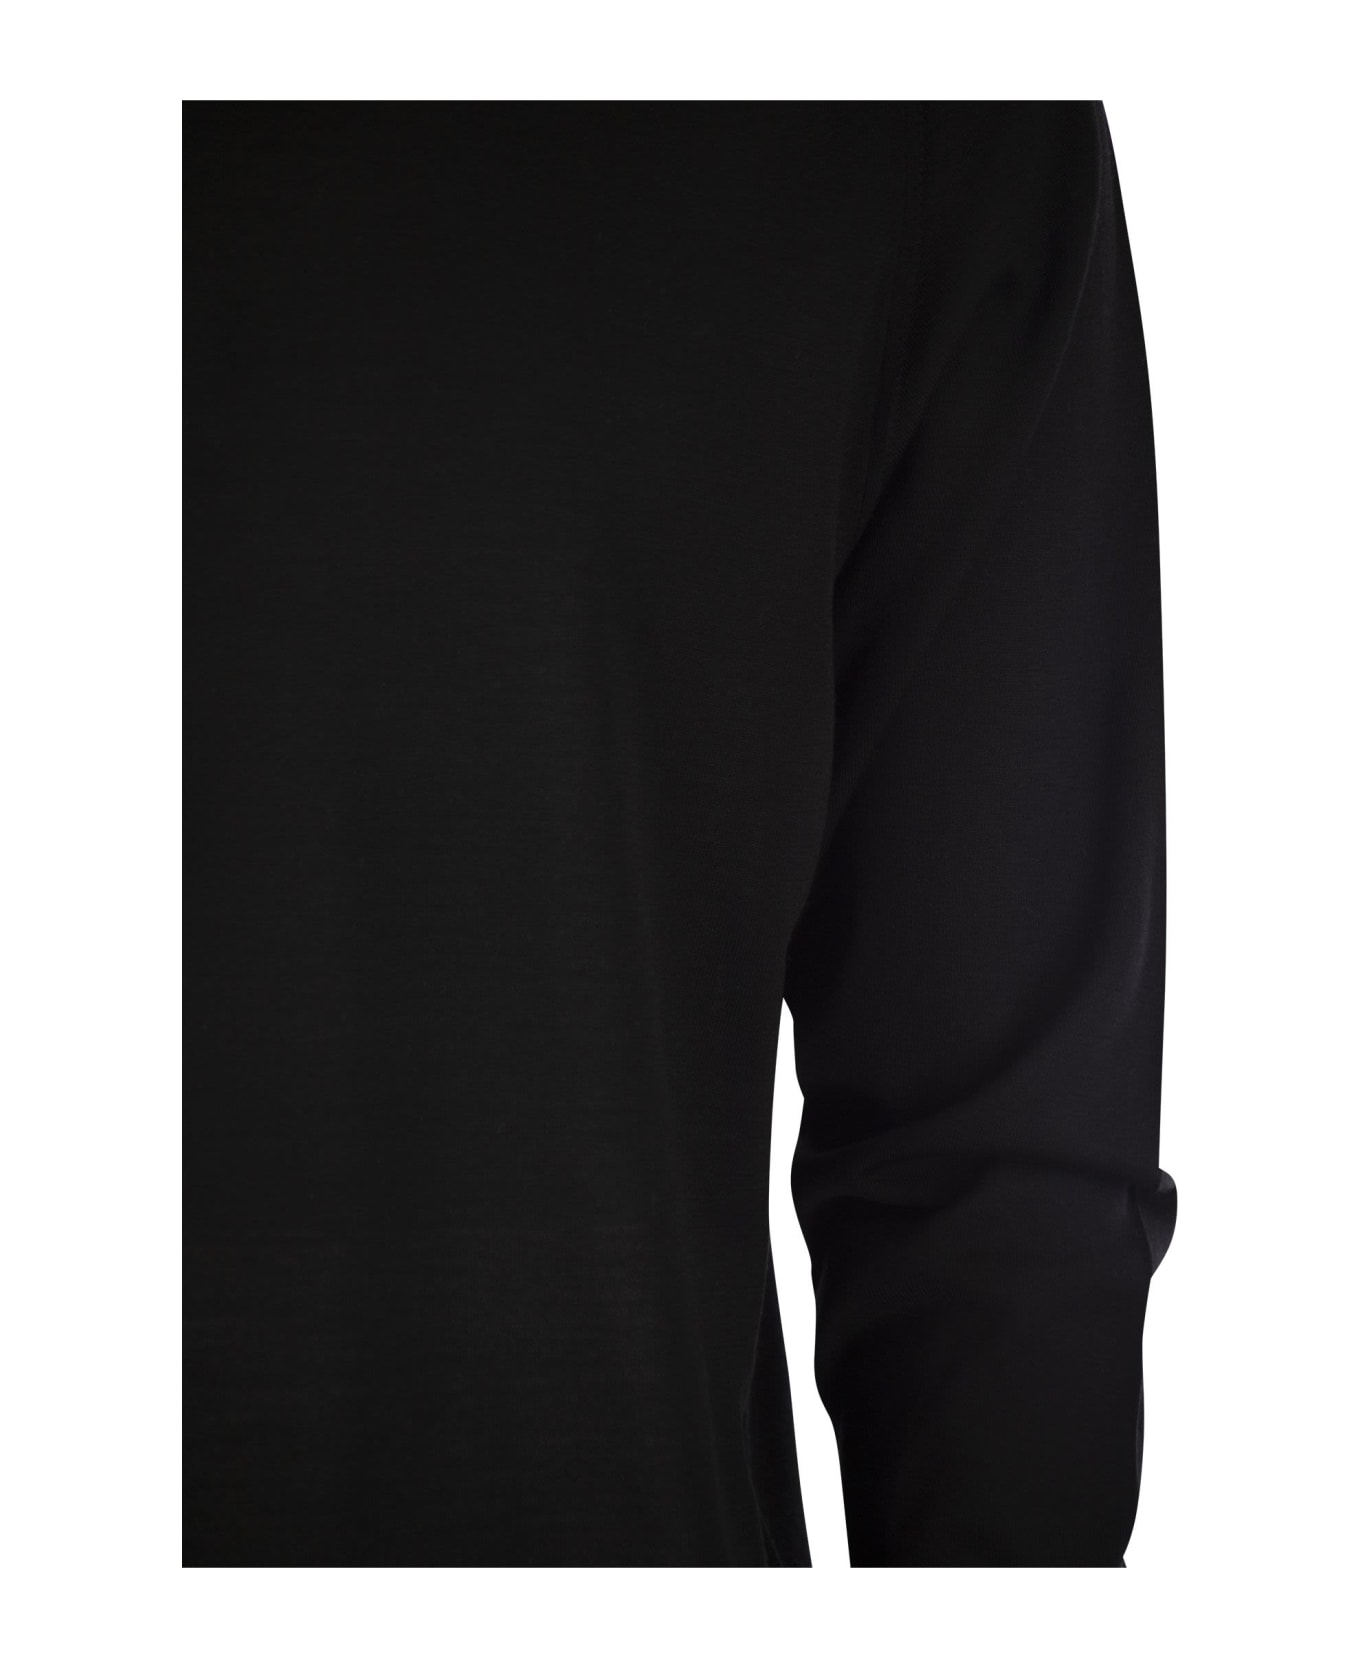 Fedeli Crew-neck Sweater In Superfine Virgin Wool - Black